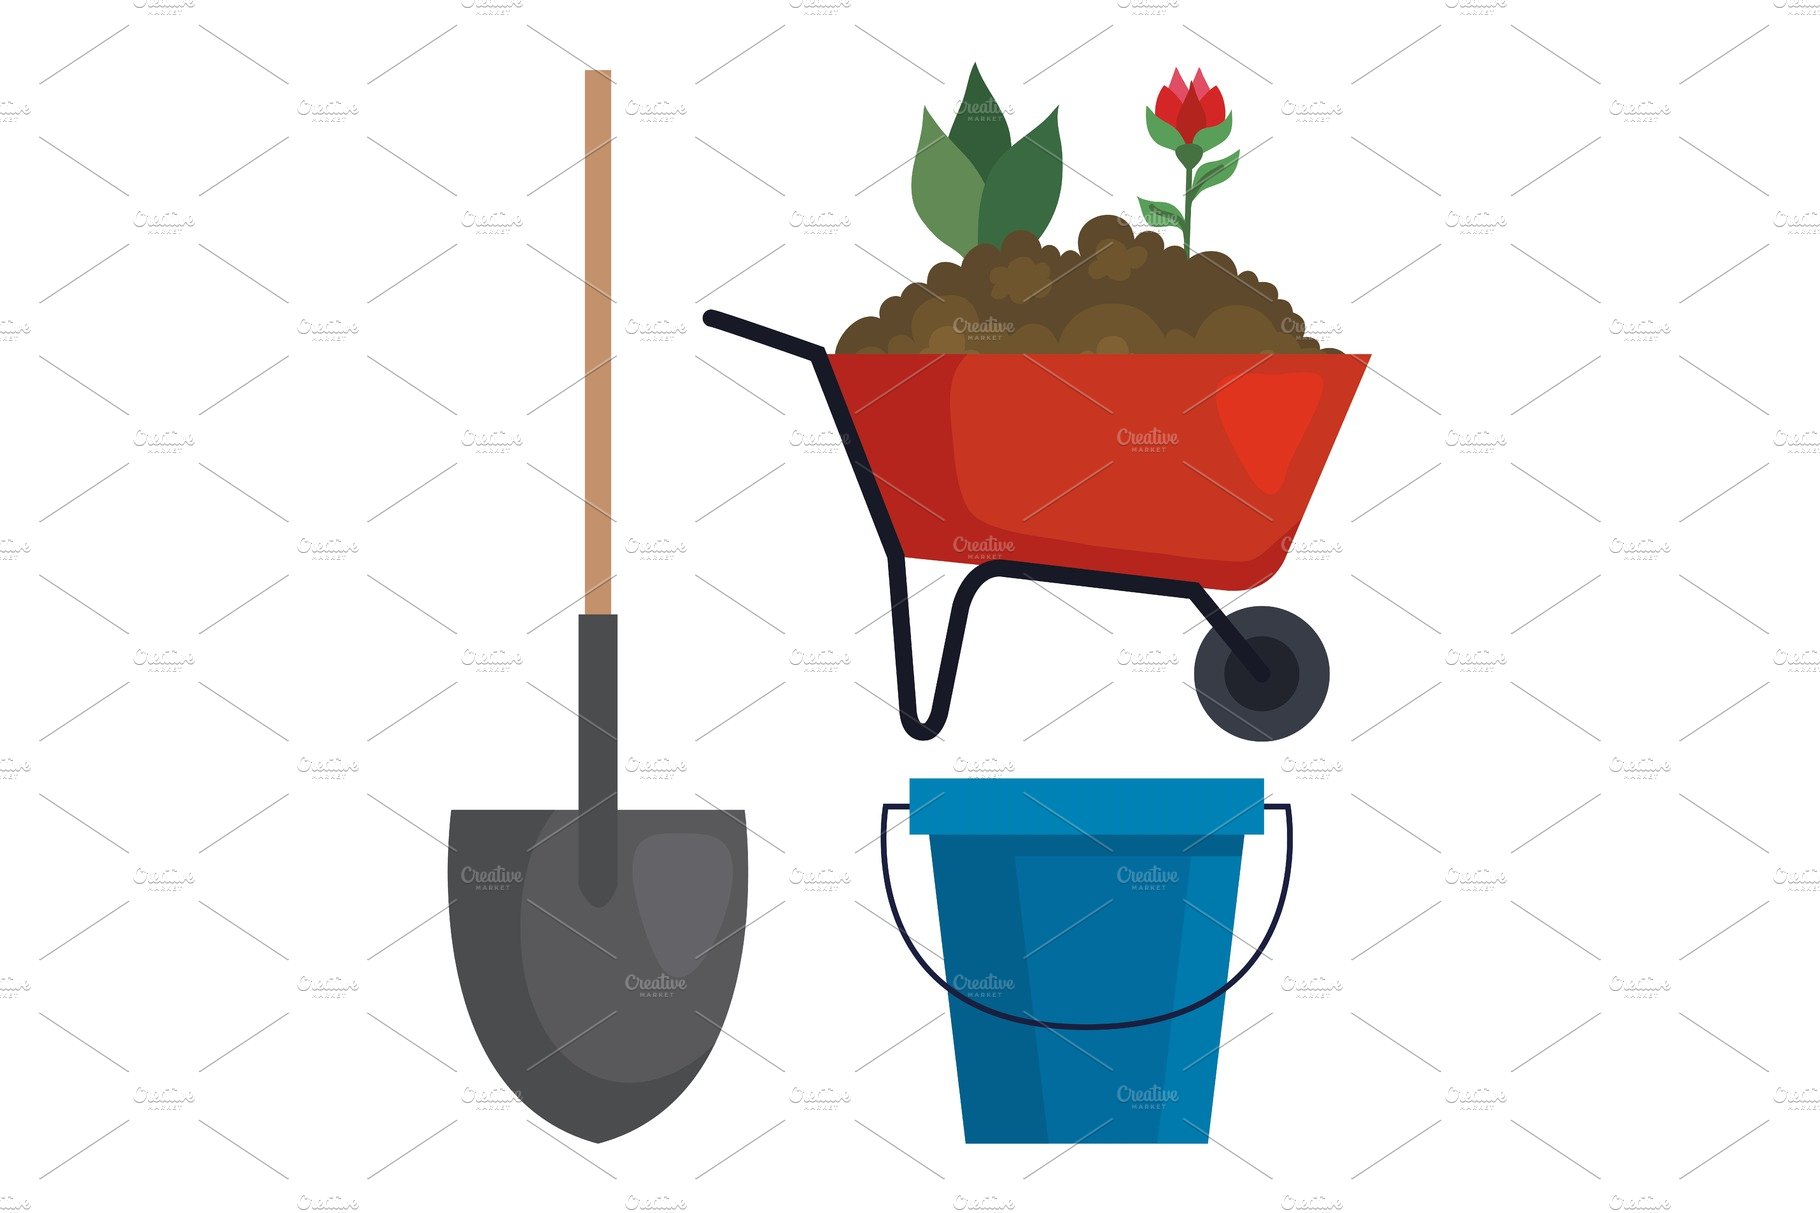 Gardening shovel wheelbarrow and cover image.